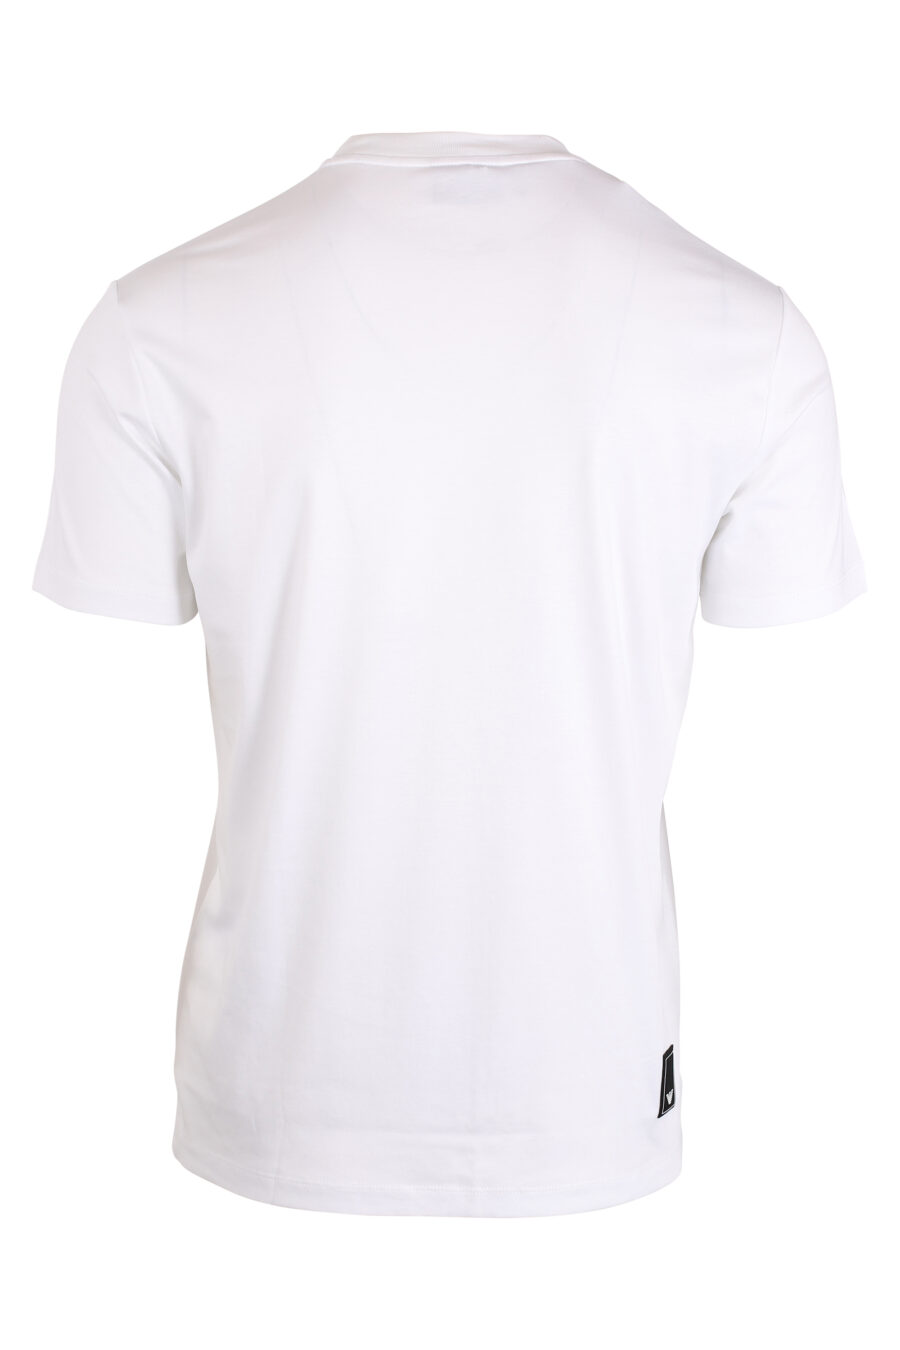 Camiseta blanca con minilogo blanco - IMG 4268